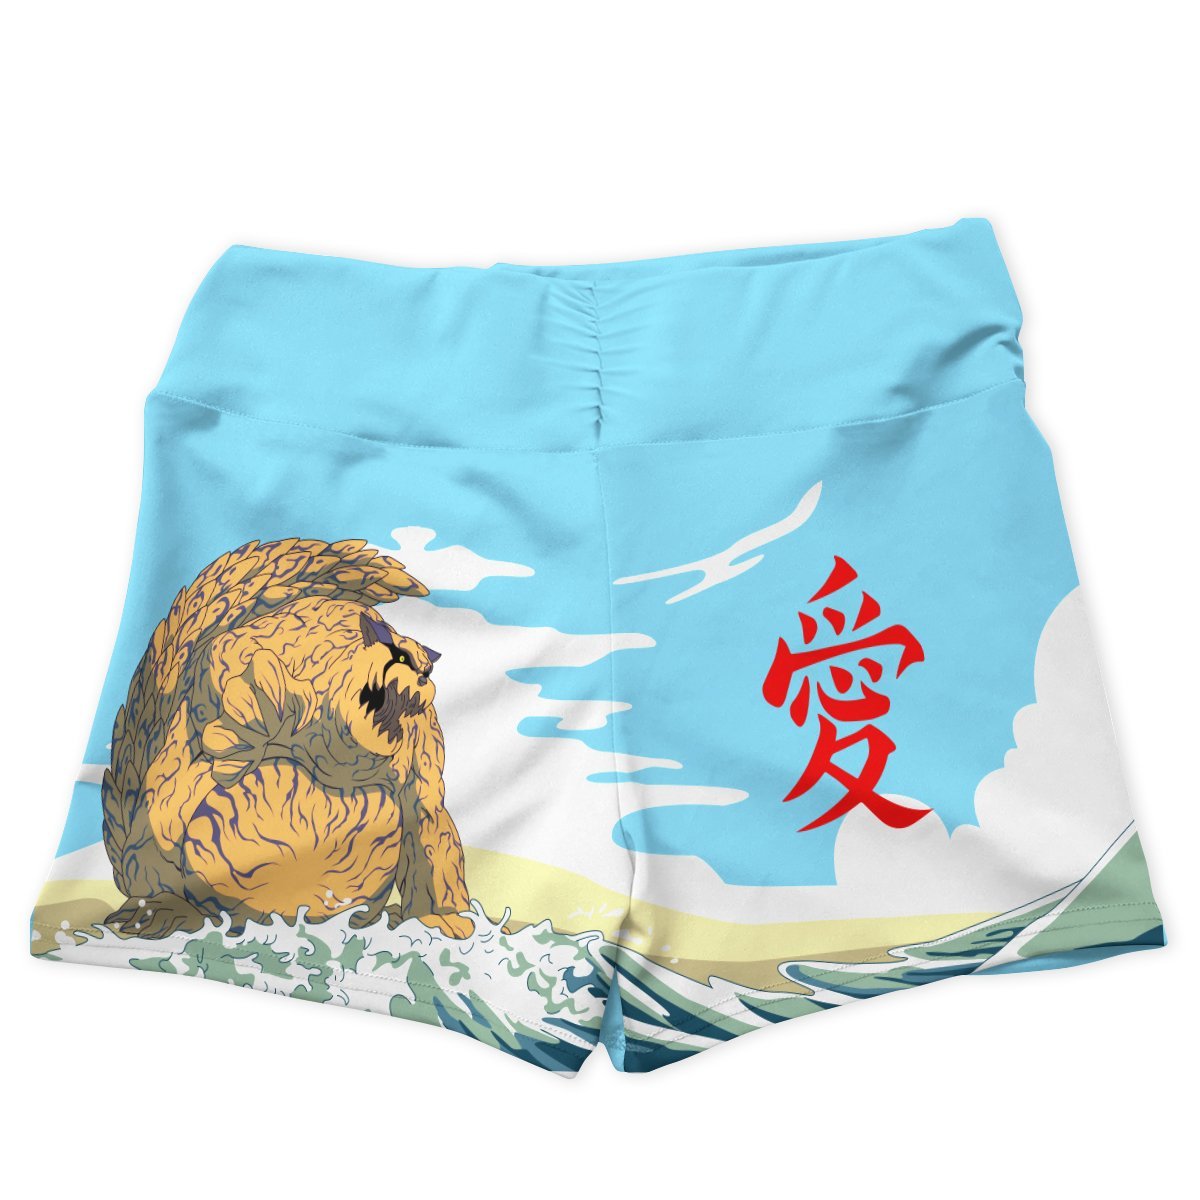 gaara summer active wear set 185747 - Anime Swimsuits